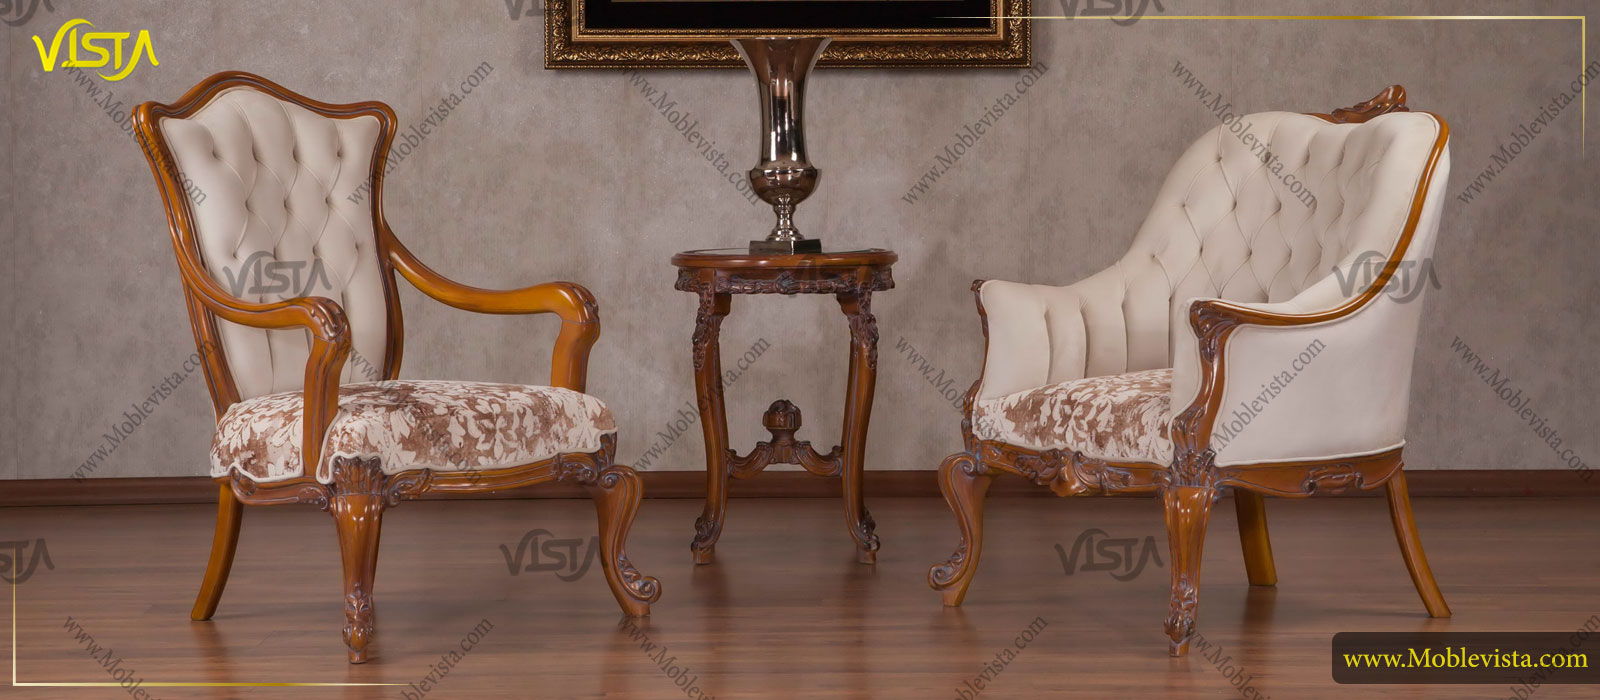 Alis klasik mobilyalar